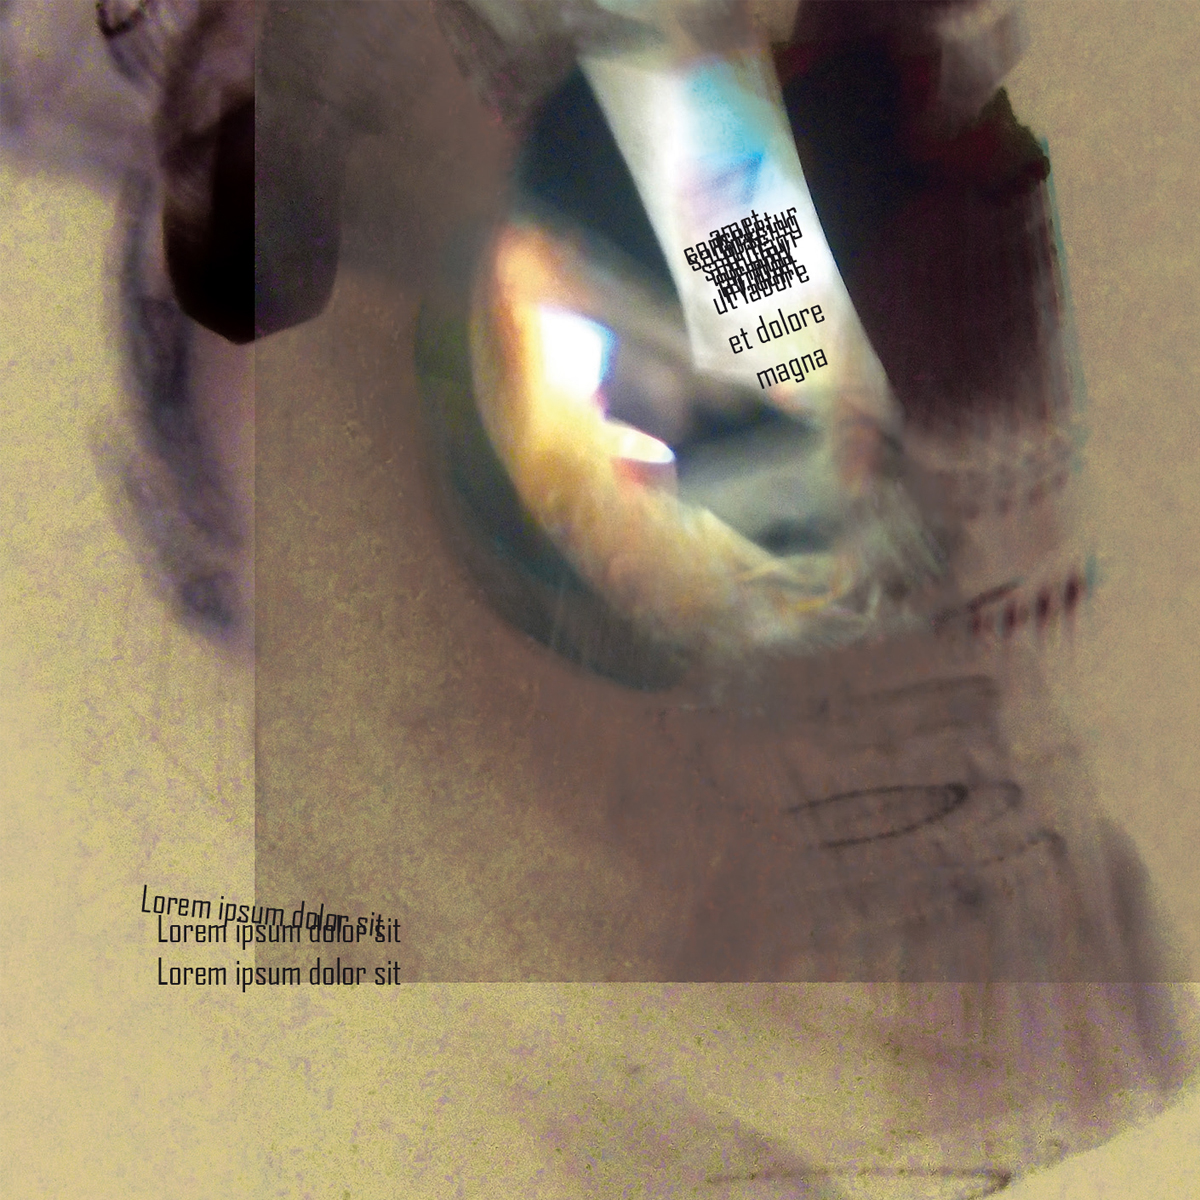 coverart coverdesign cover identity branding  musicians artists ILLUSTRATION  Booklet